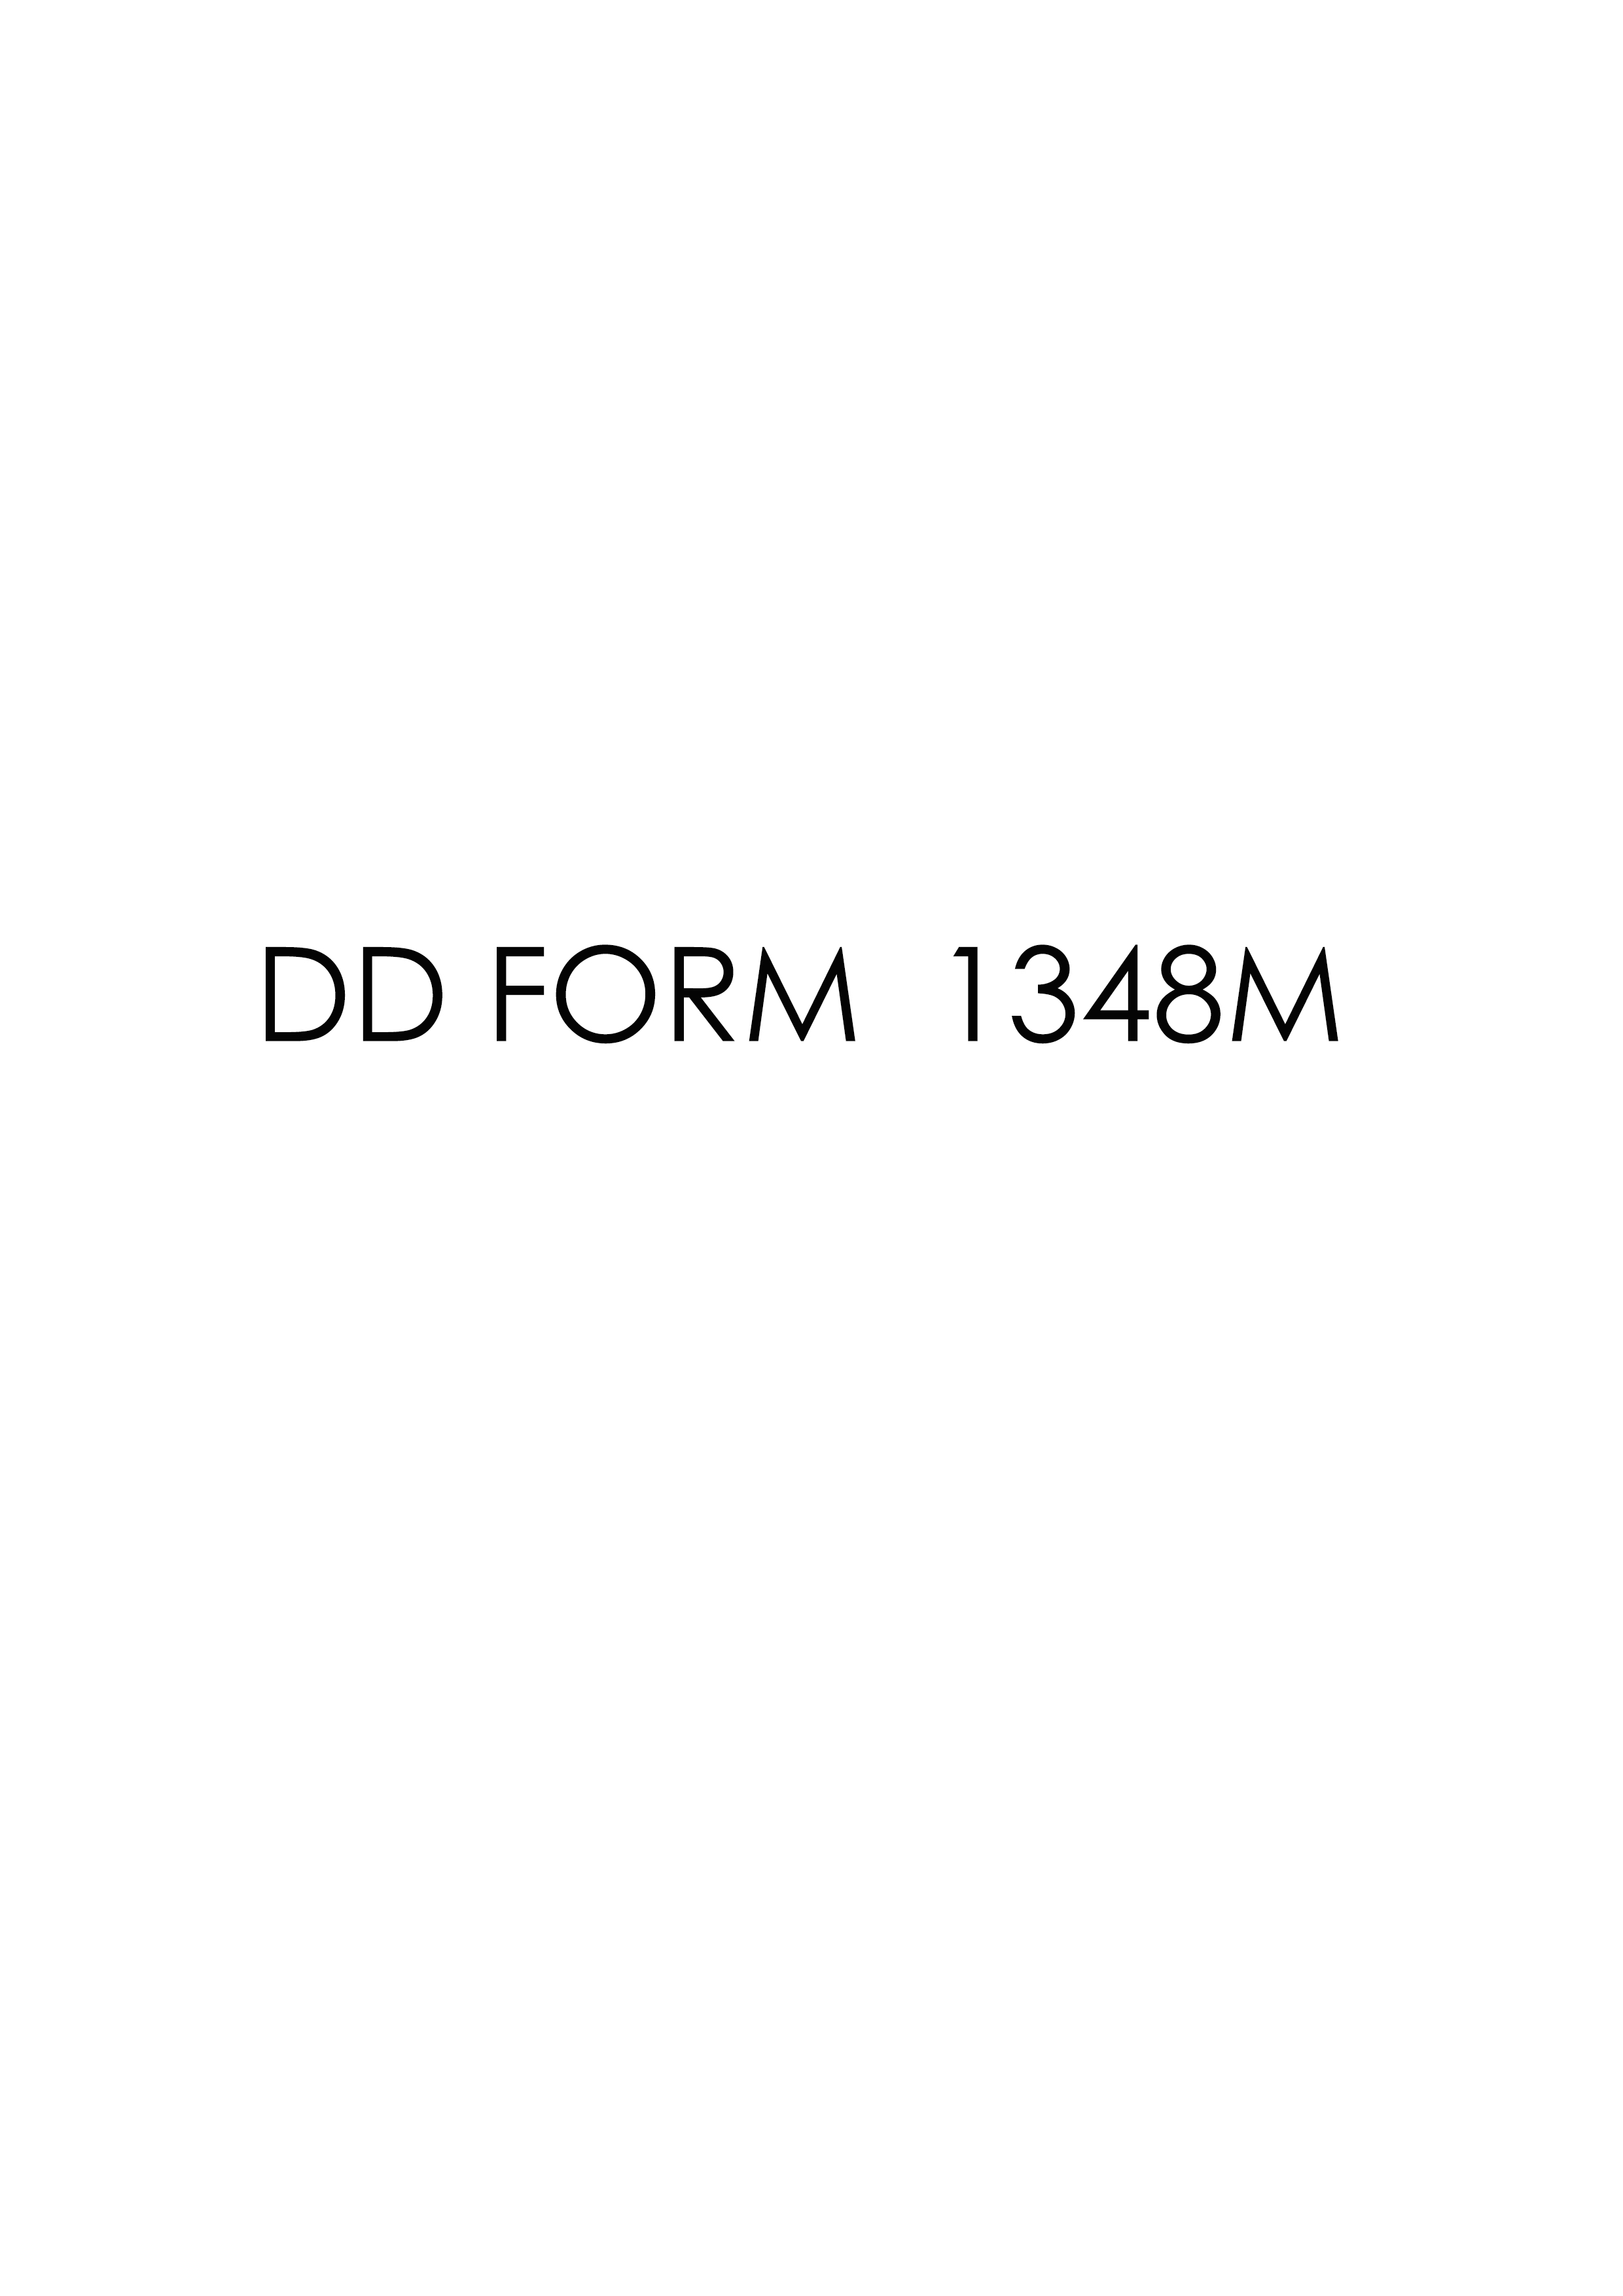 Download dd Form 1348M